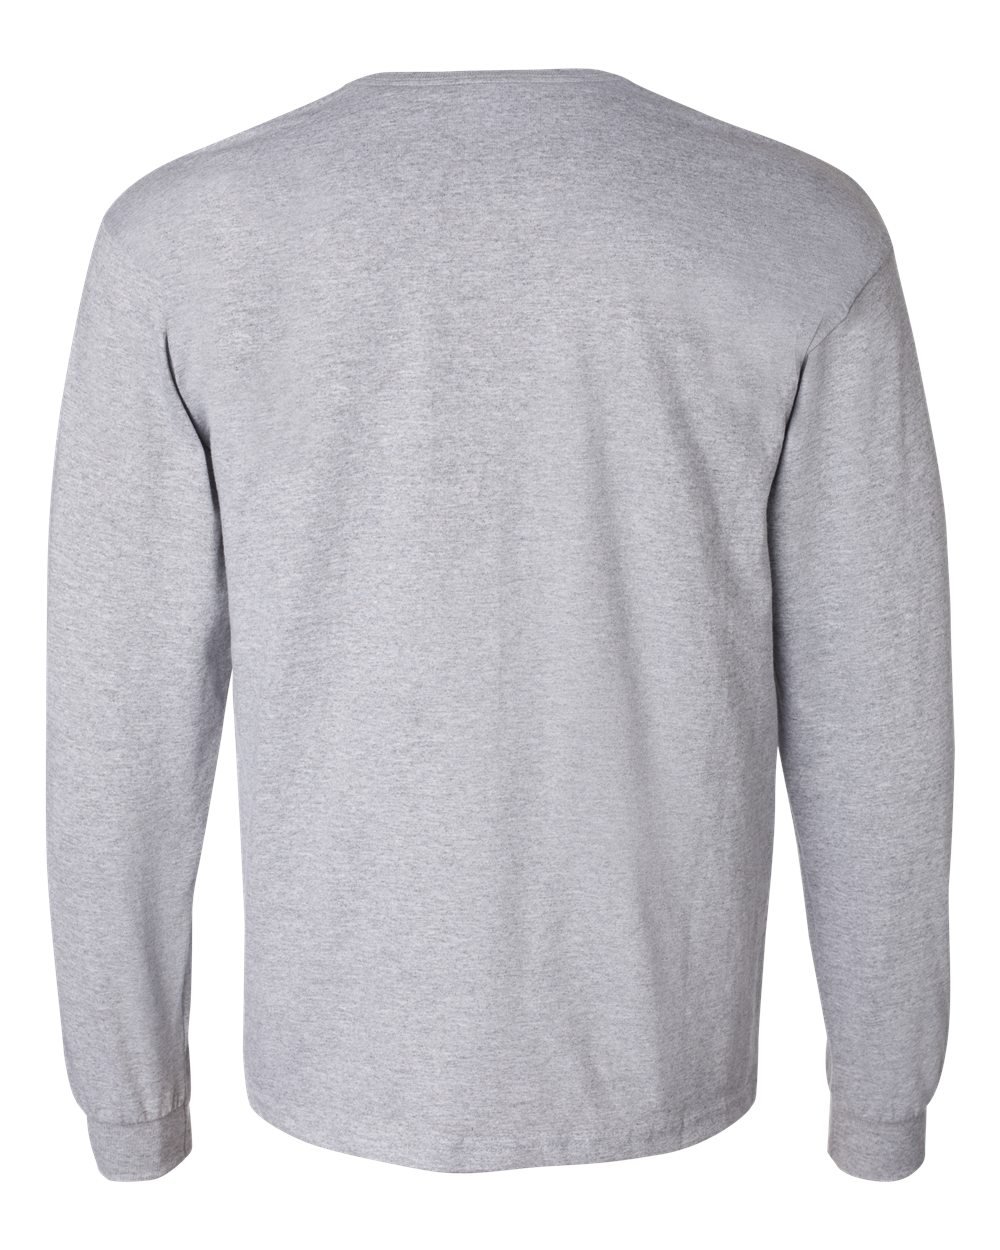 Gildan Men's Ultra Cotton Long-Sleeve T-Shirt with Pocket